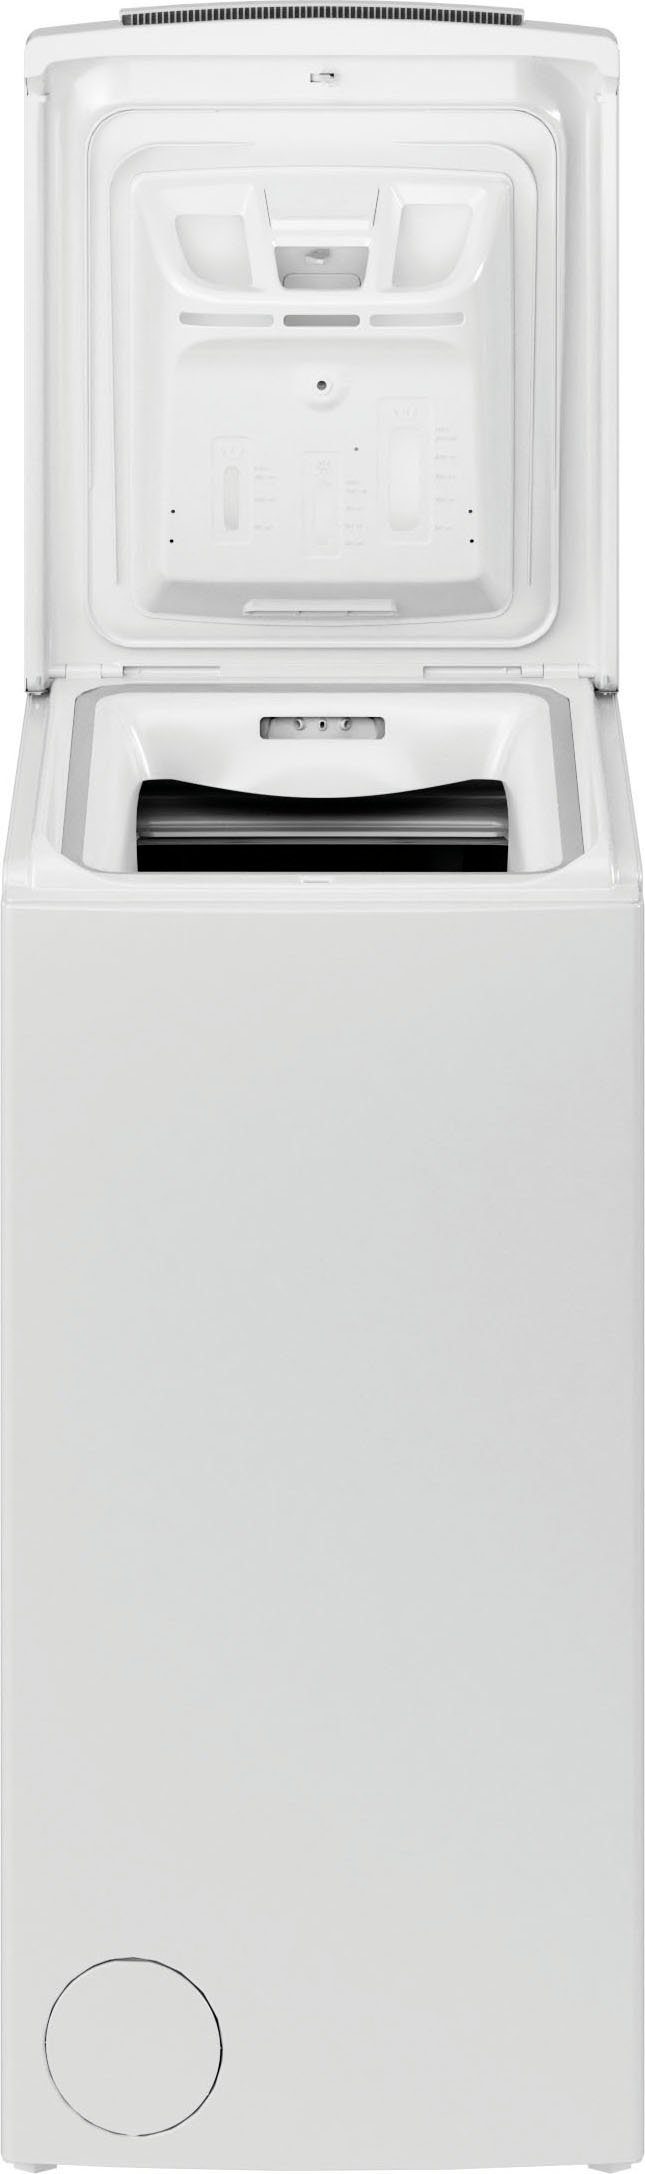 kg, 6 Waschmaschine BAUKNECHT WAT Toplader Eco Smart U/min 12C, 1200